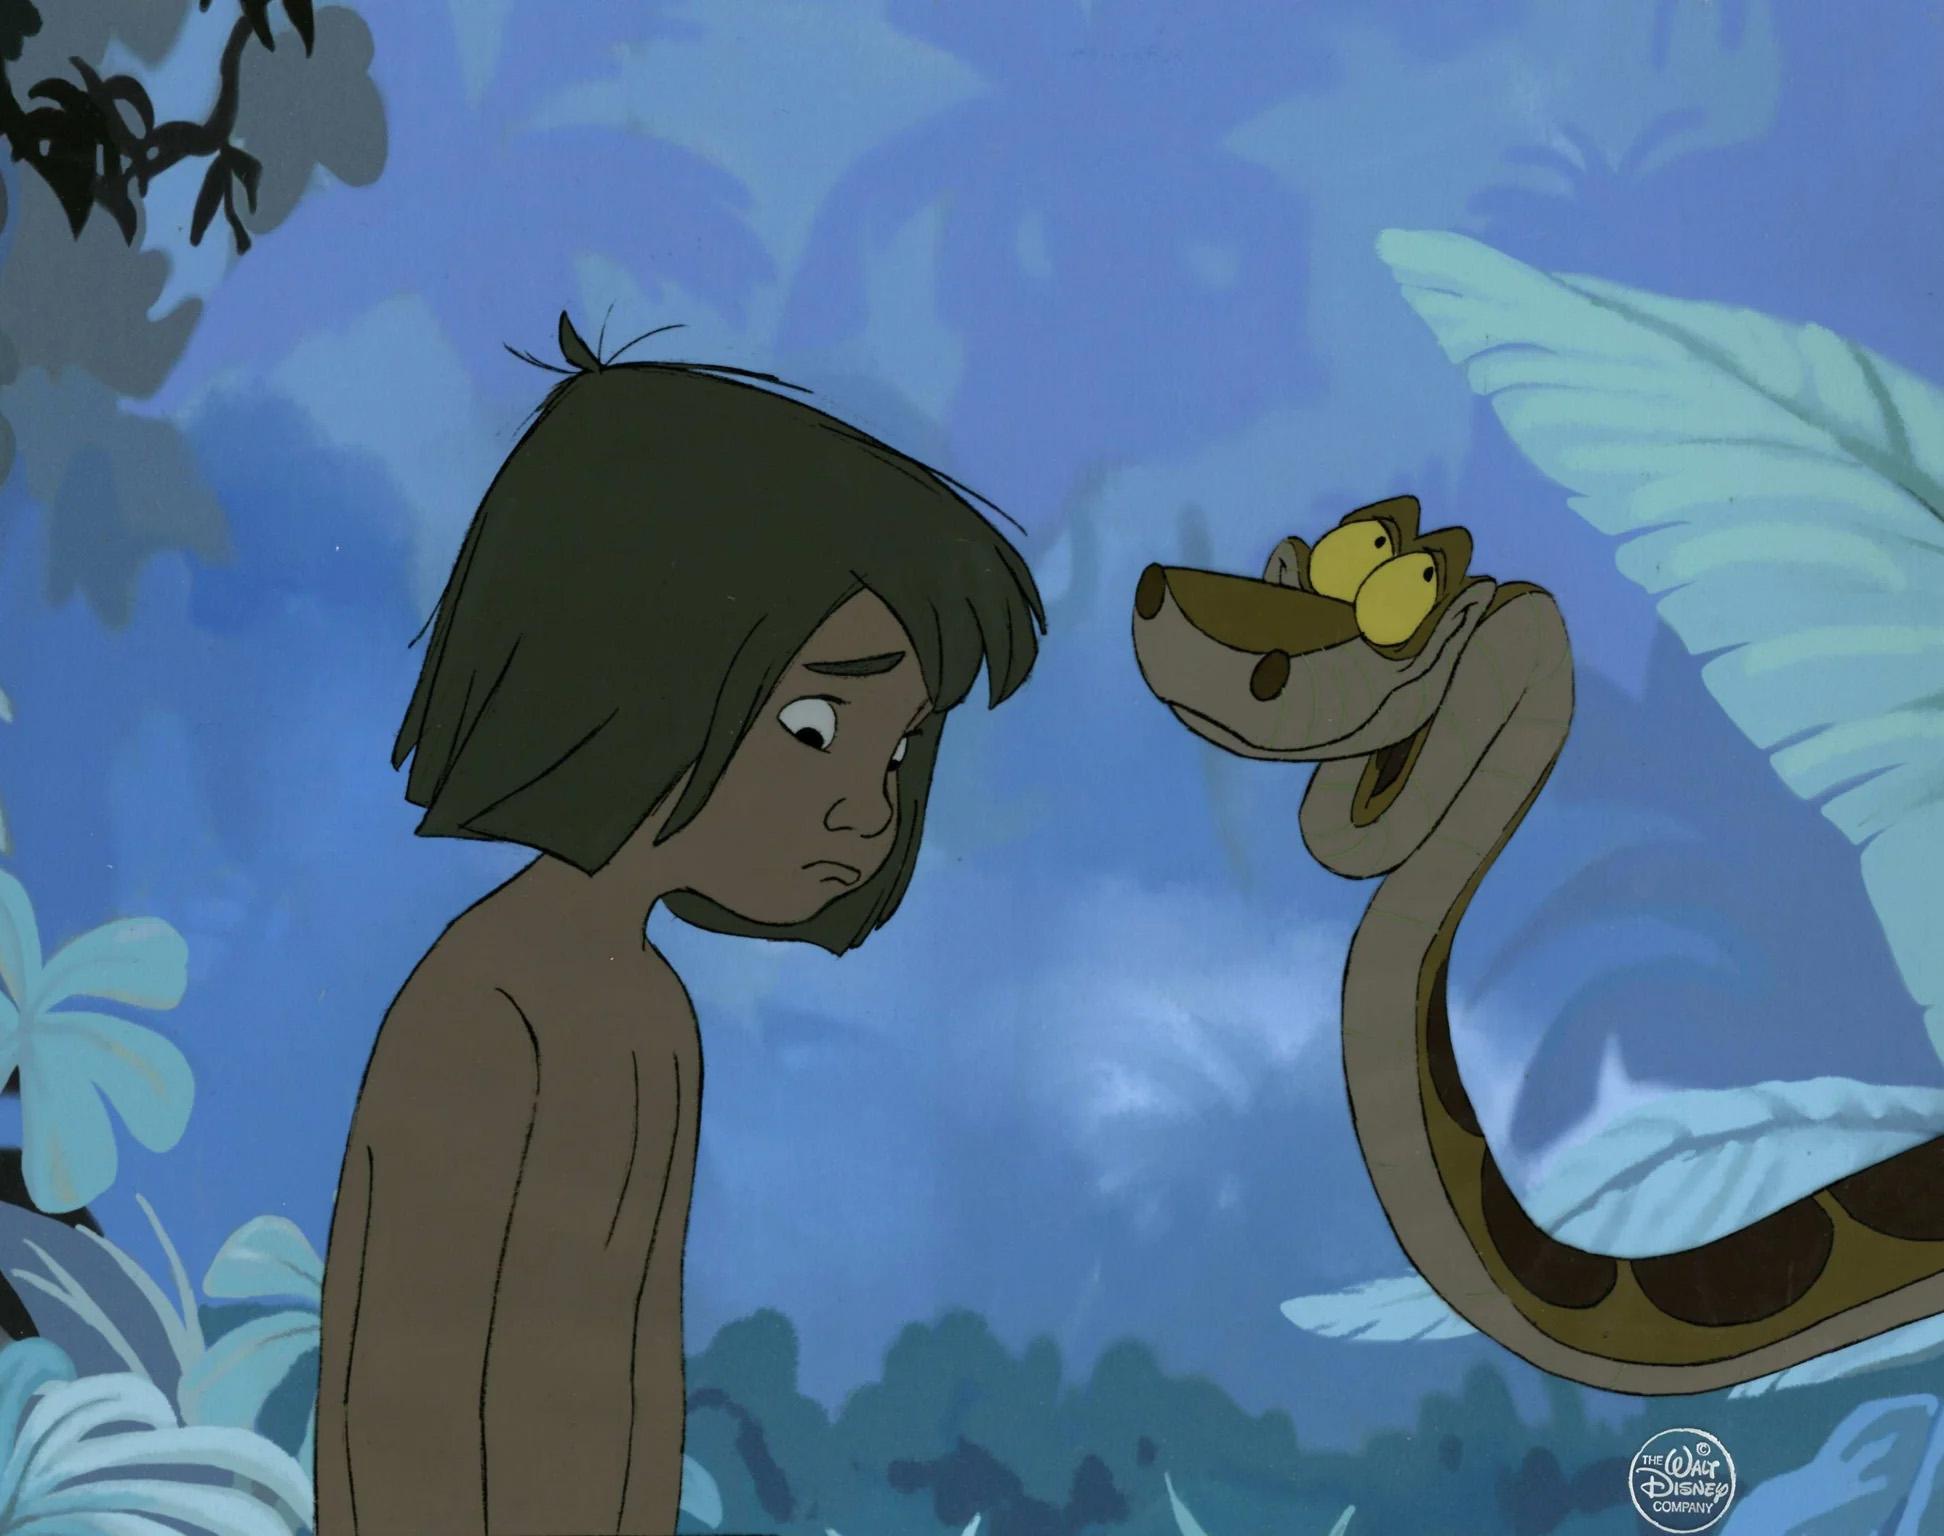 The Jungle Book Original Production Cel: Mowgli and Kaa - Art by Walt Disney Studio Artists